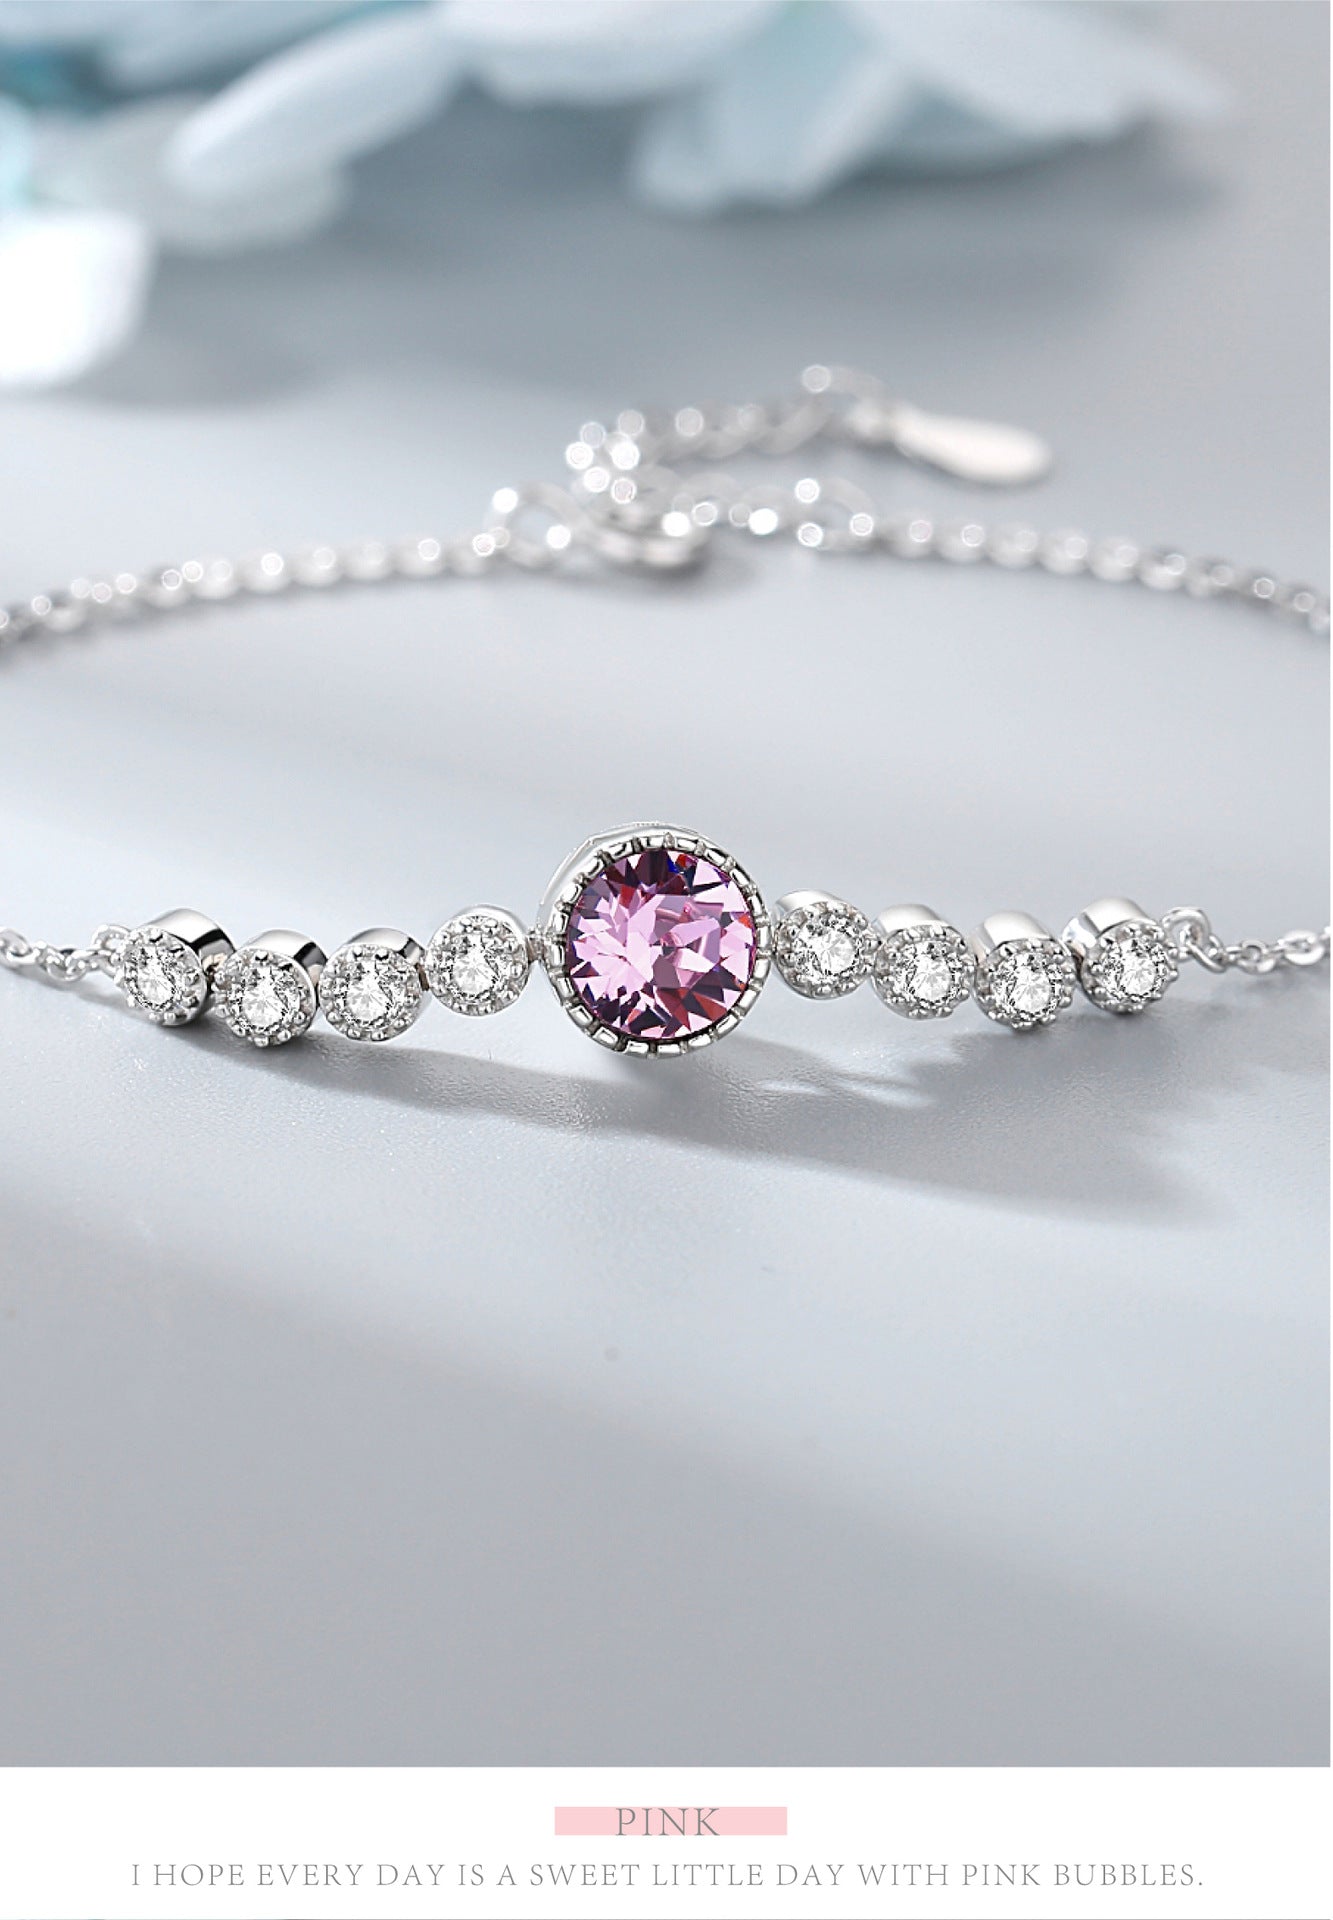 Romantic Luxury Crystal Sliver Bracelet for Women-Bracelets-Blue-Free Shipping Leatheretro